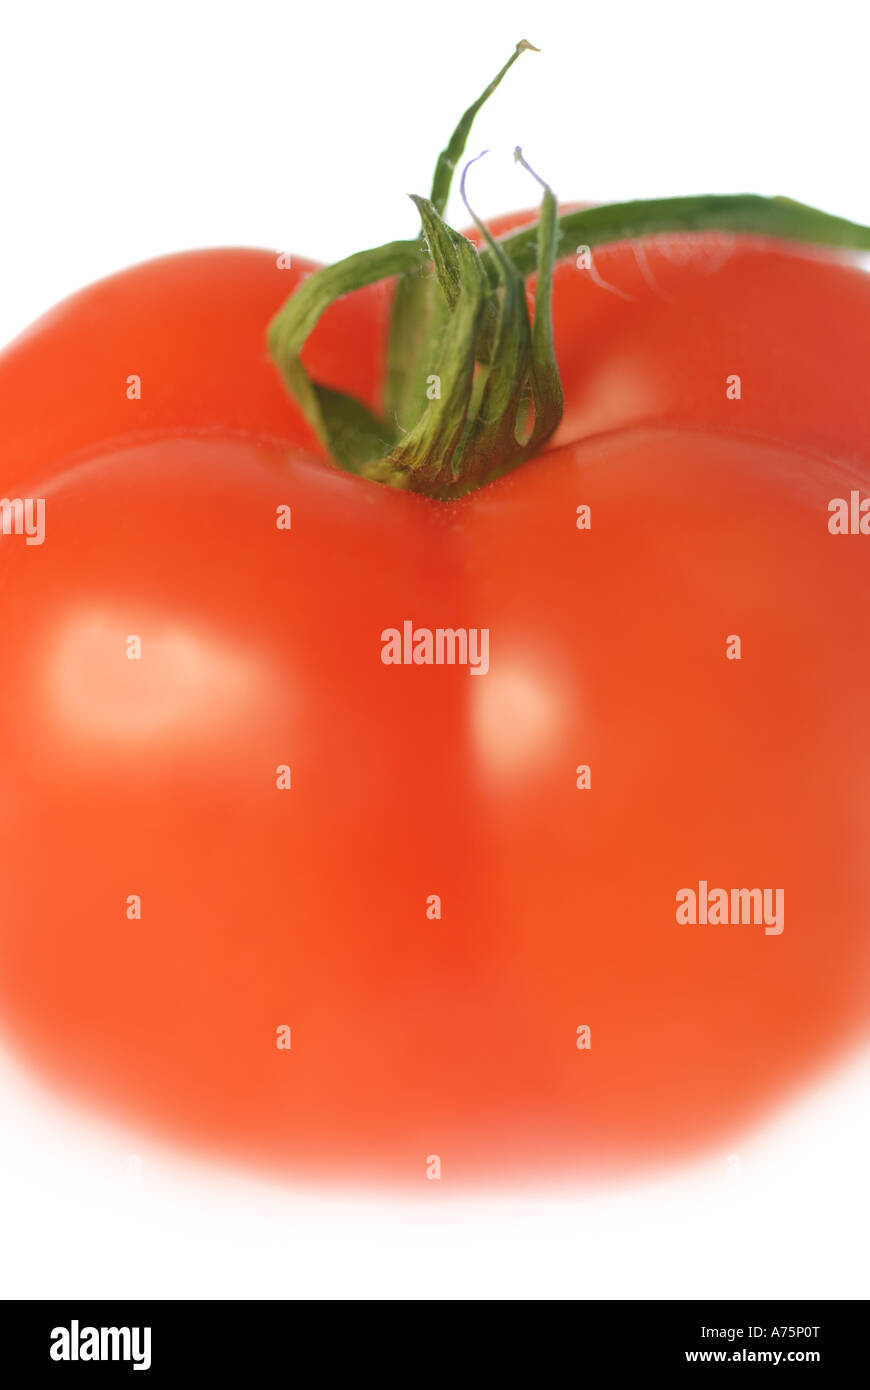 A fresh whole tomato close up. Stock Photo